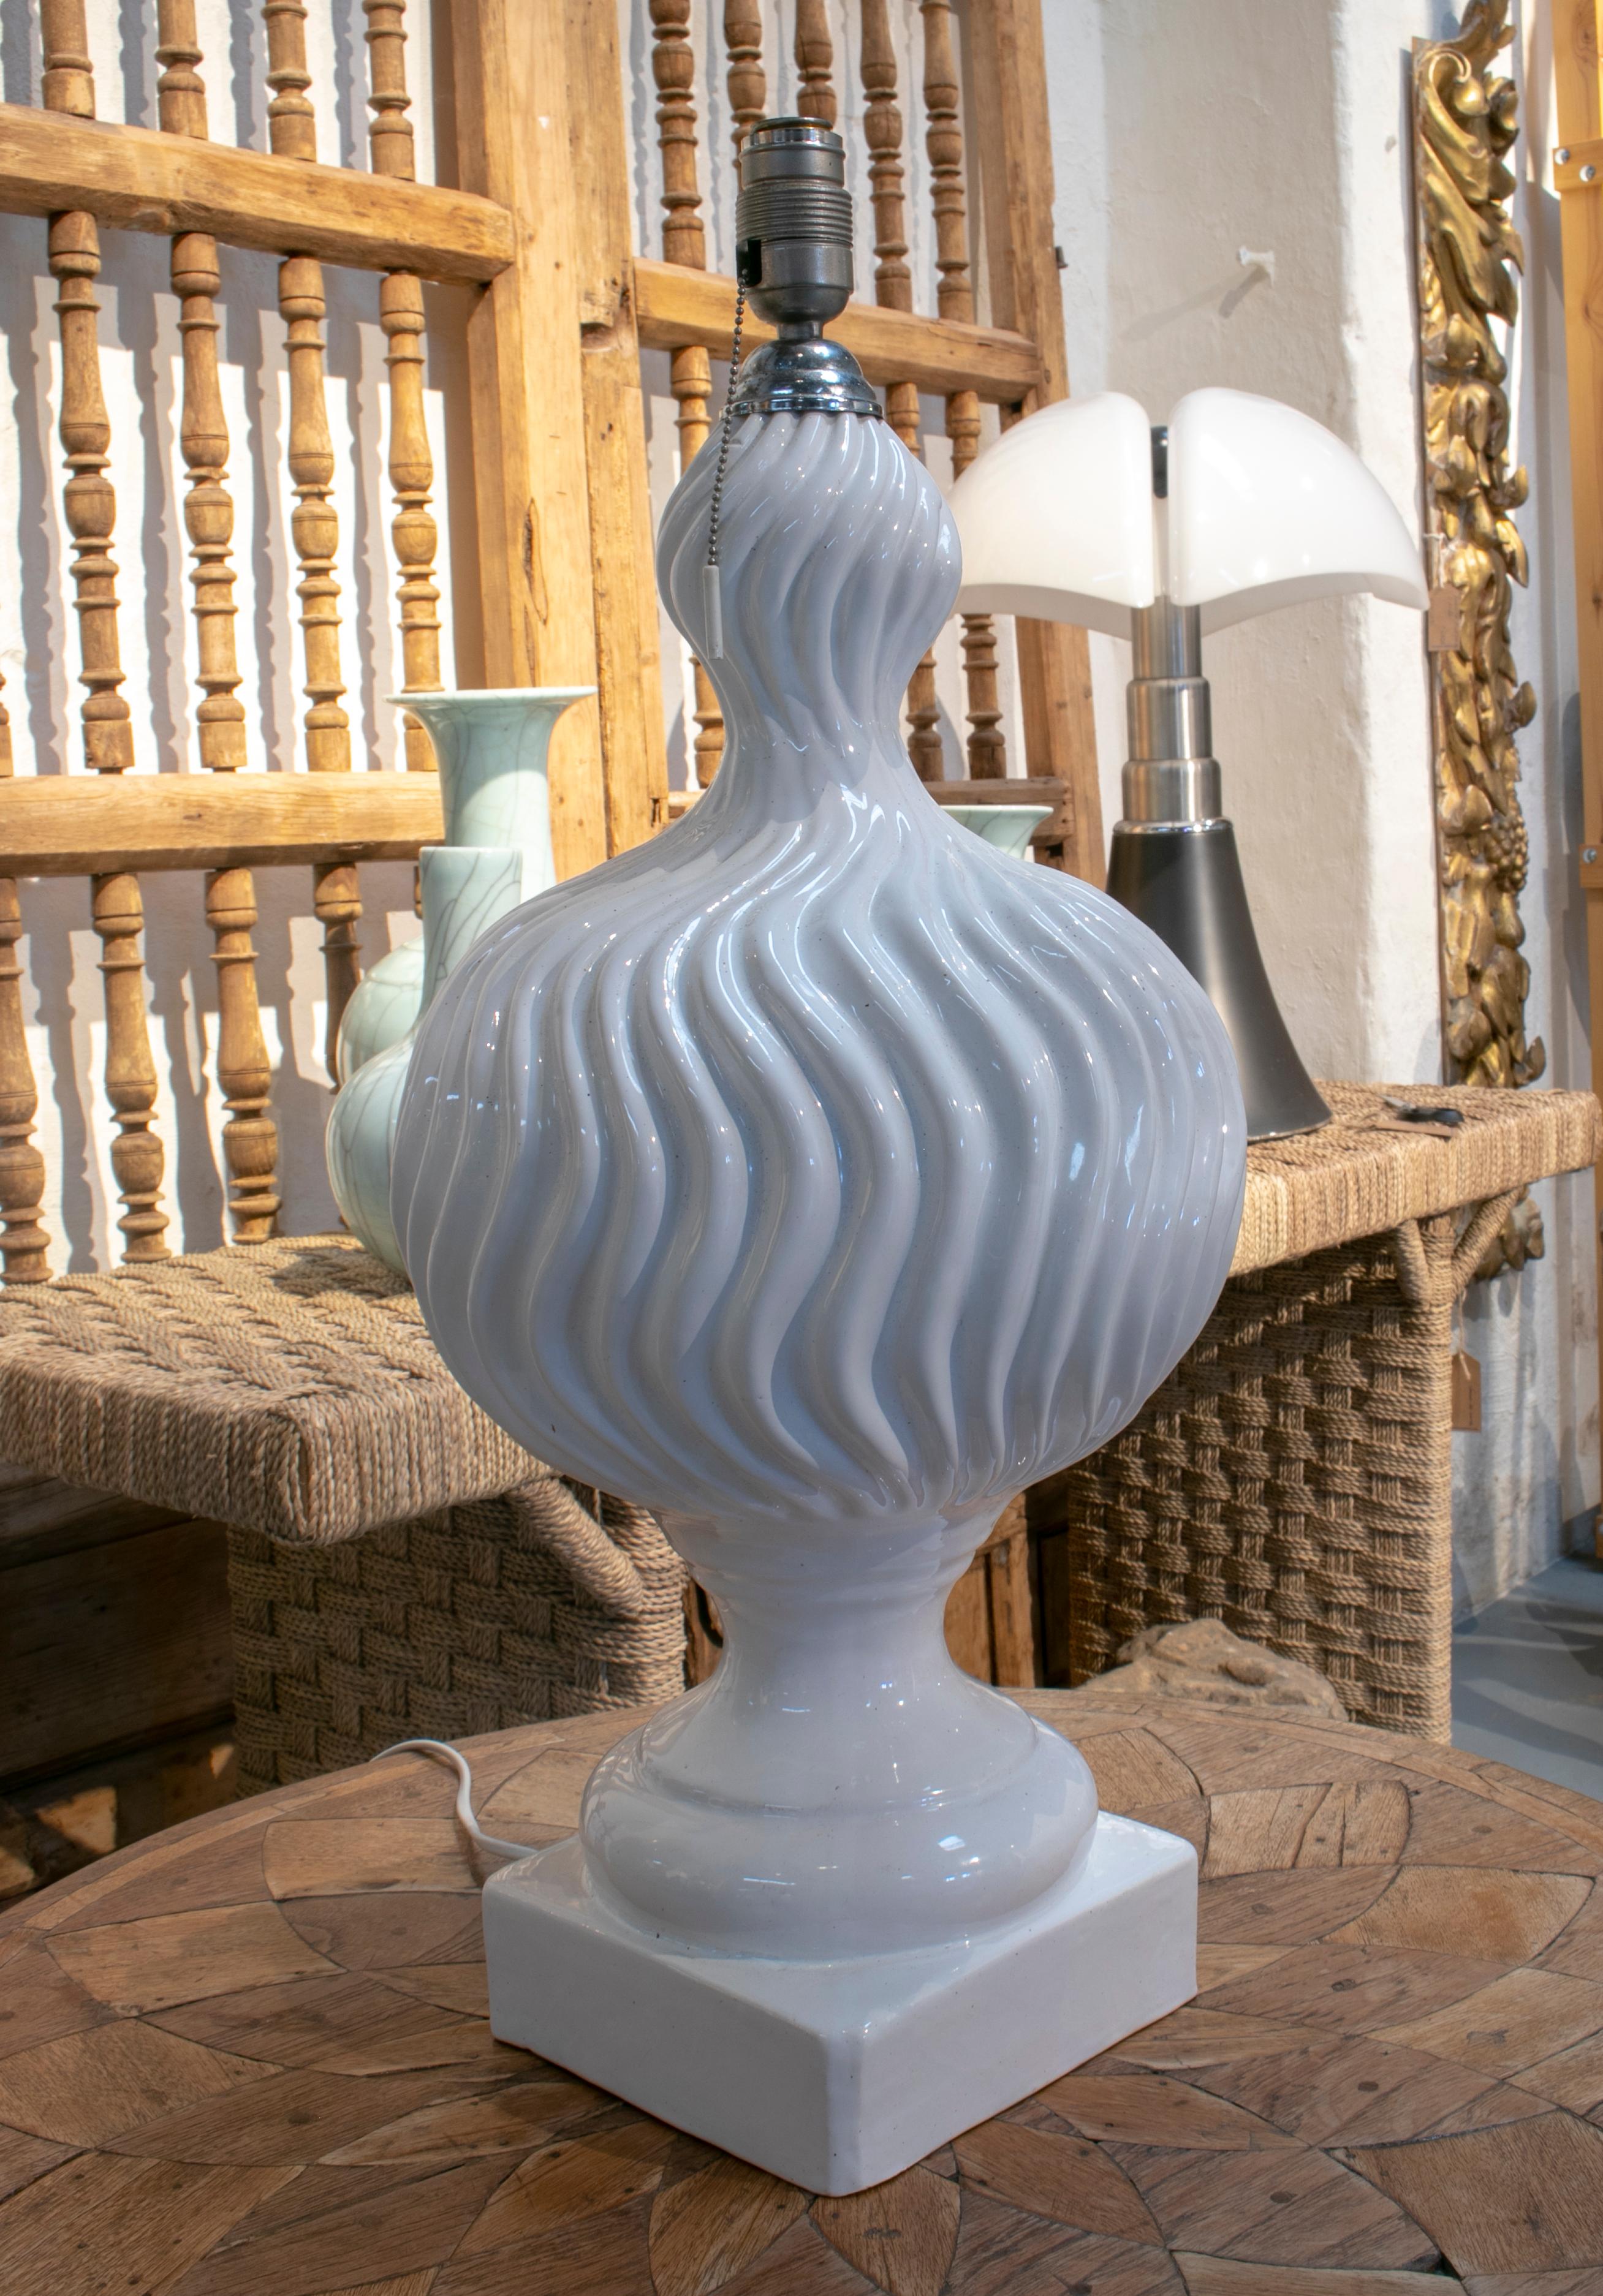 1970s Spanish white ceramic table lamp.